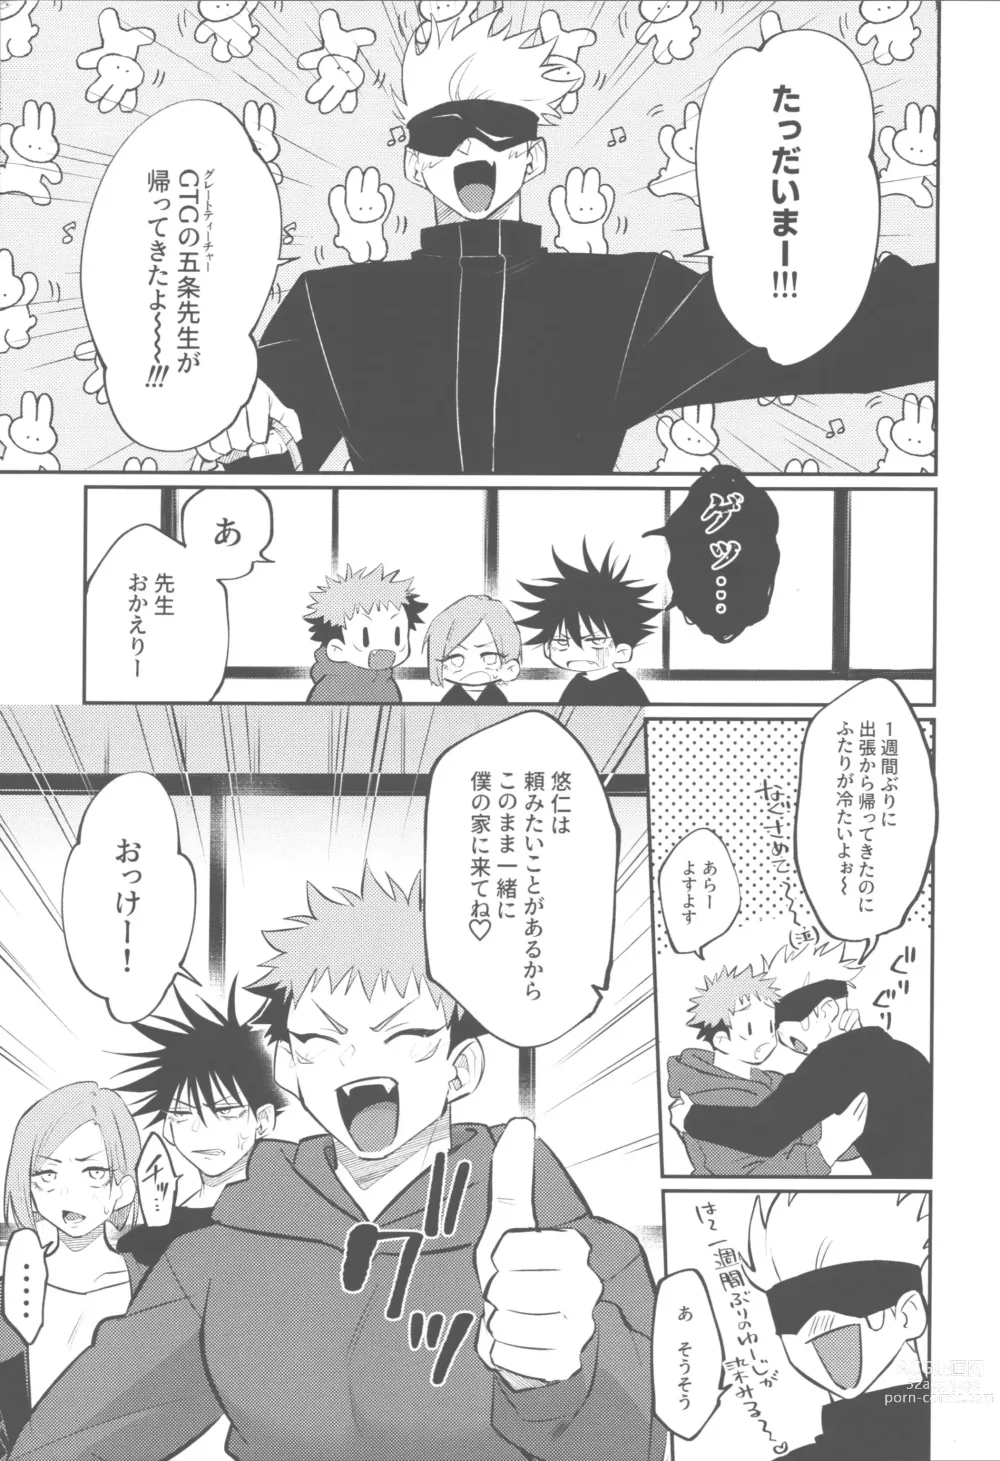 Page 3 of doujinshi Mune no Uchi Seiippai